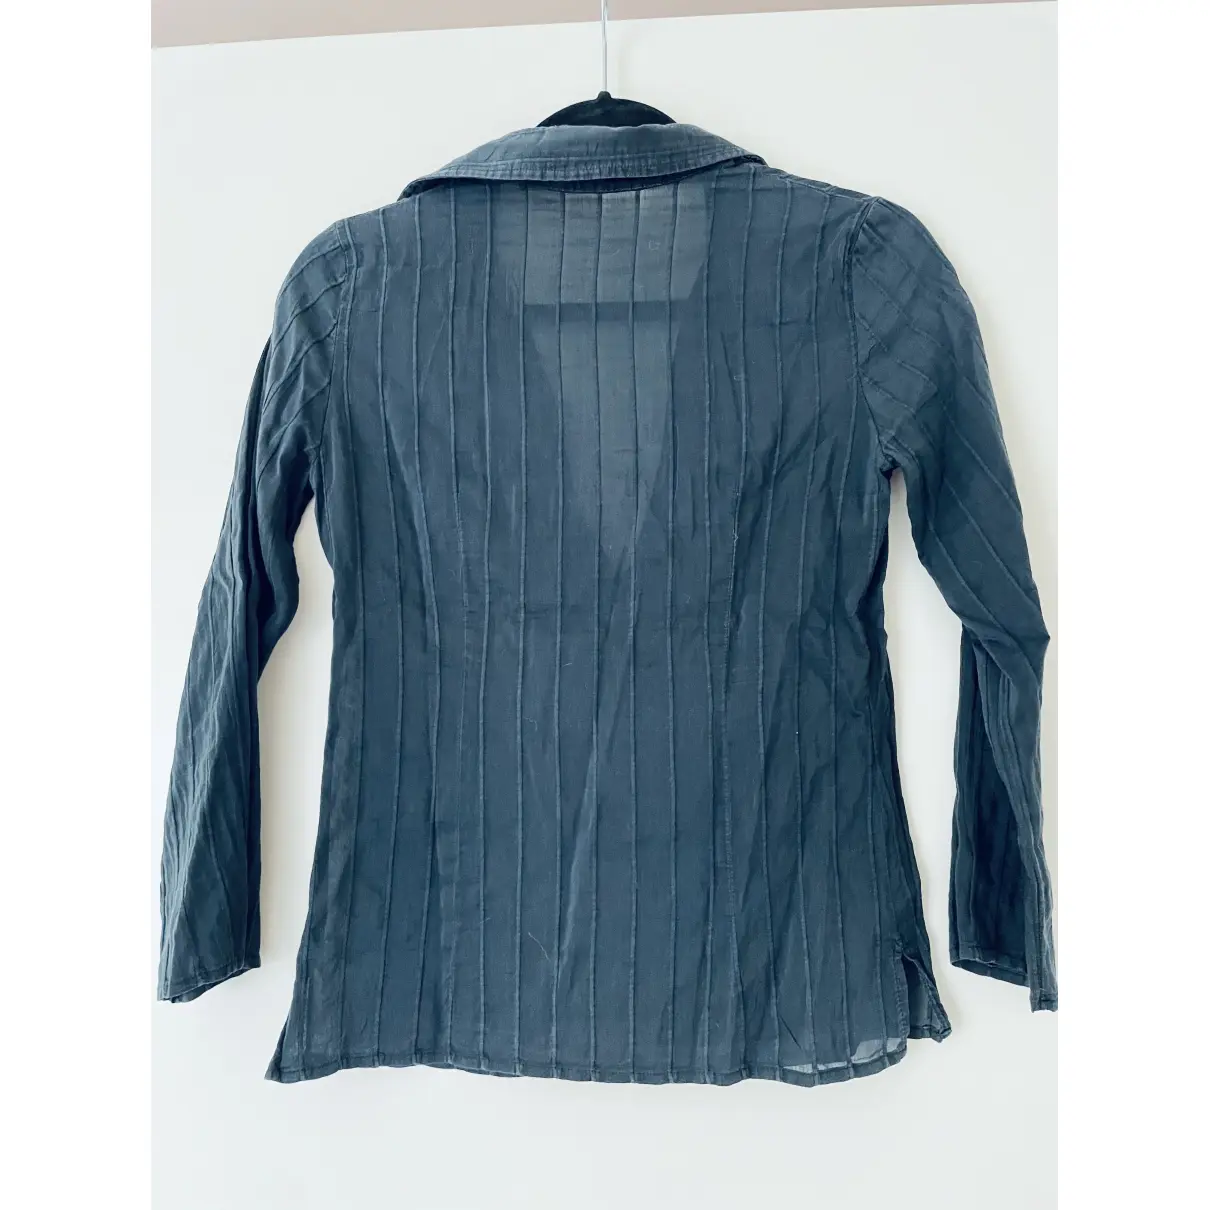 Buy Costume National Silk tunic online - Vintage